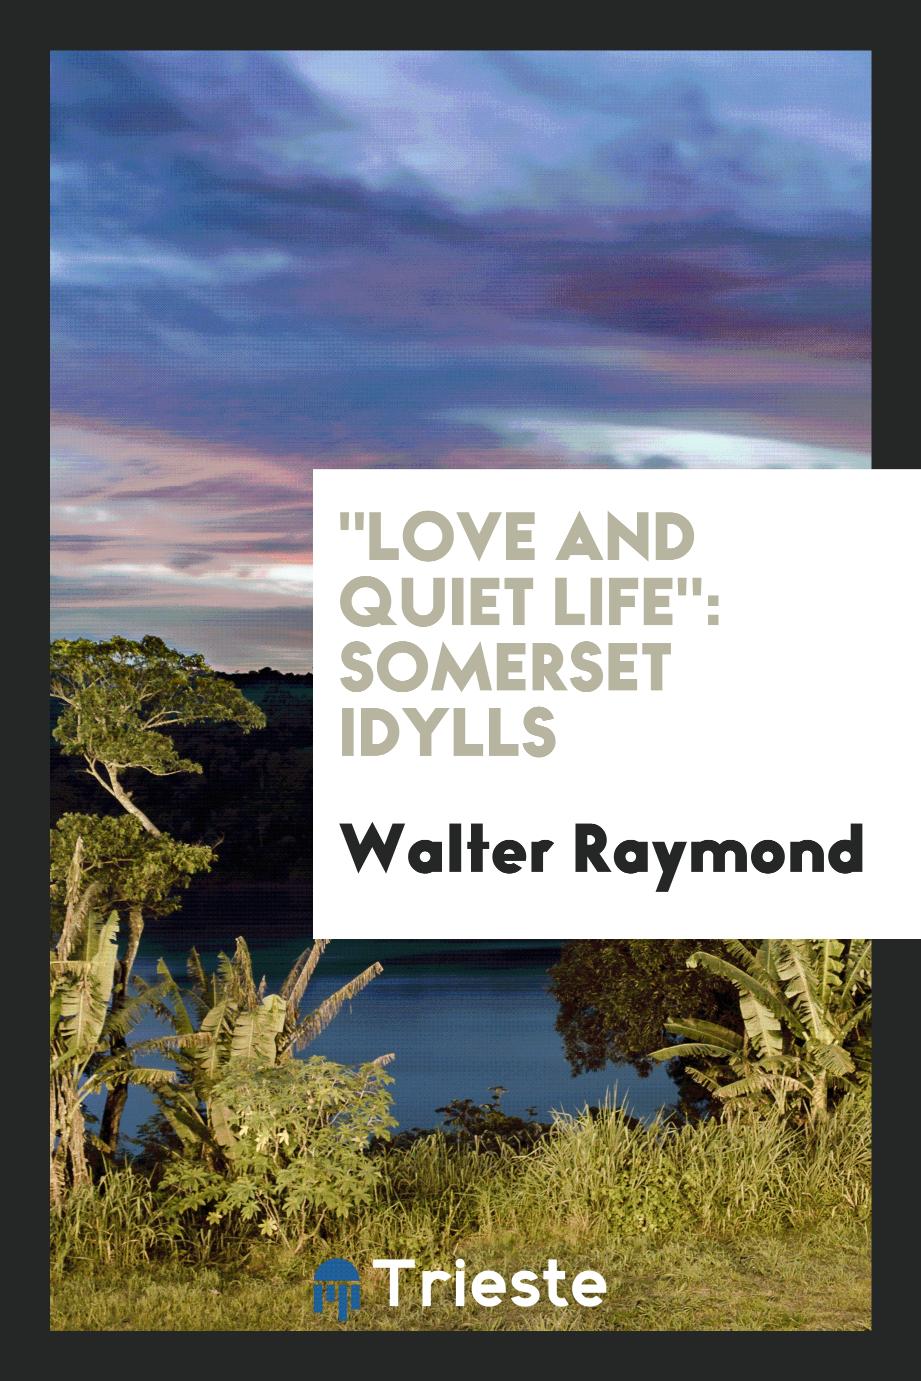 "Love and quiet life": Somerset idylls